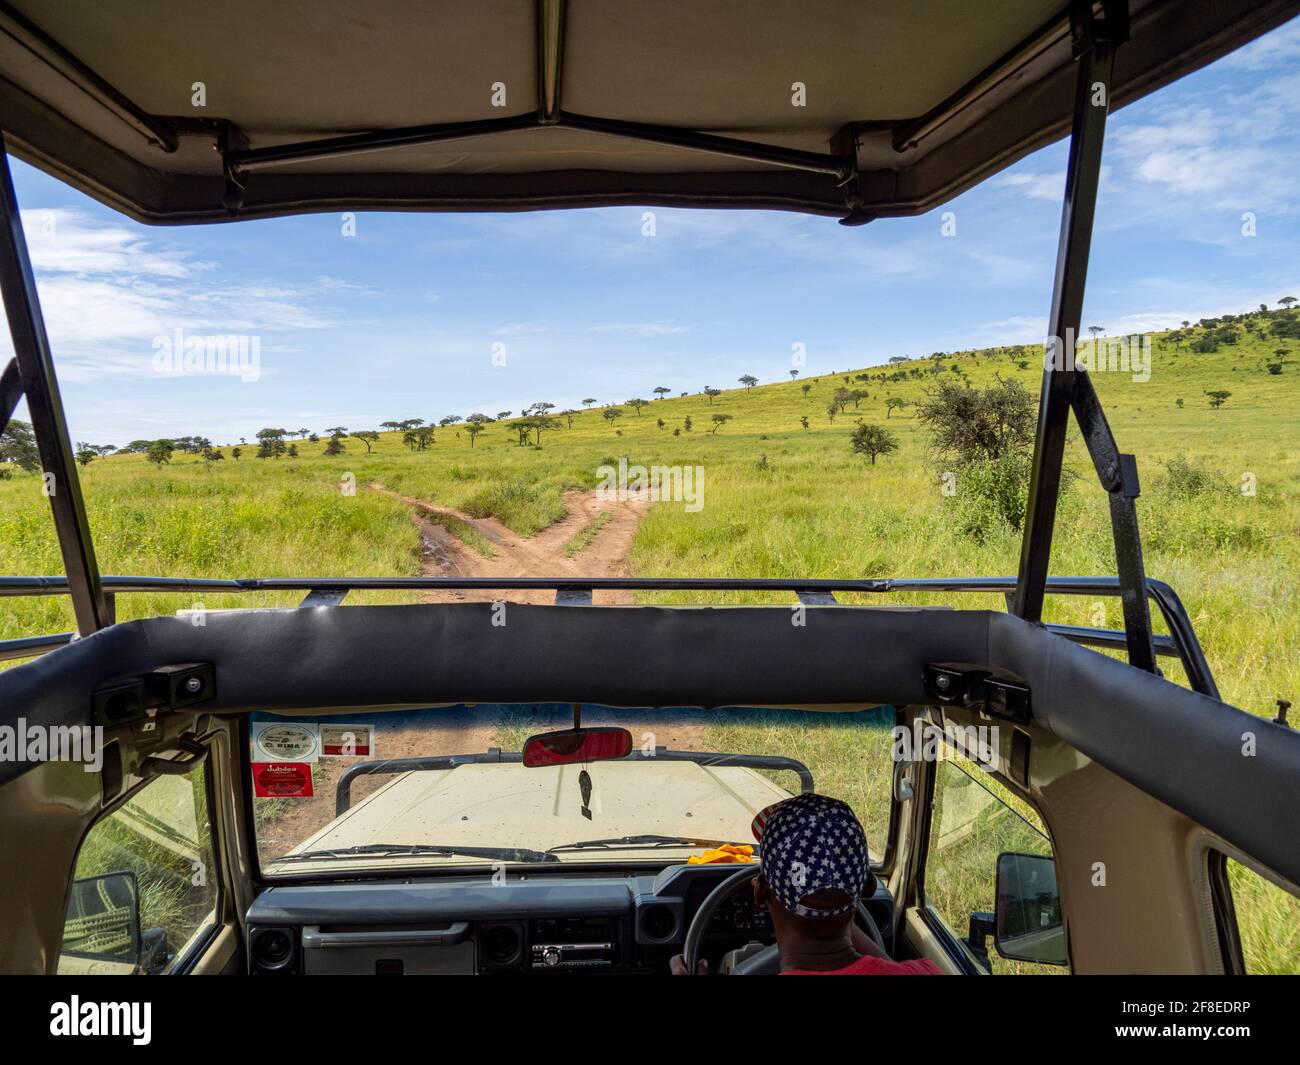 Serengeti National Park, Tanzania, Africa - February 29, 2020: View from the safari jeep looking across the Savannah Stock Photo